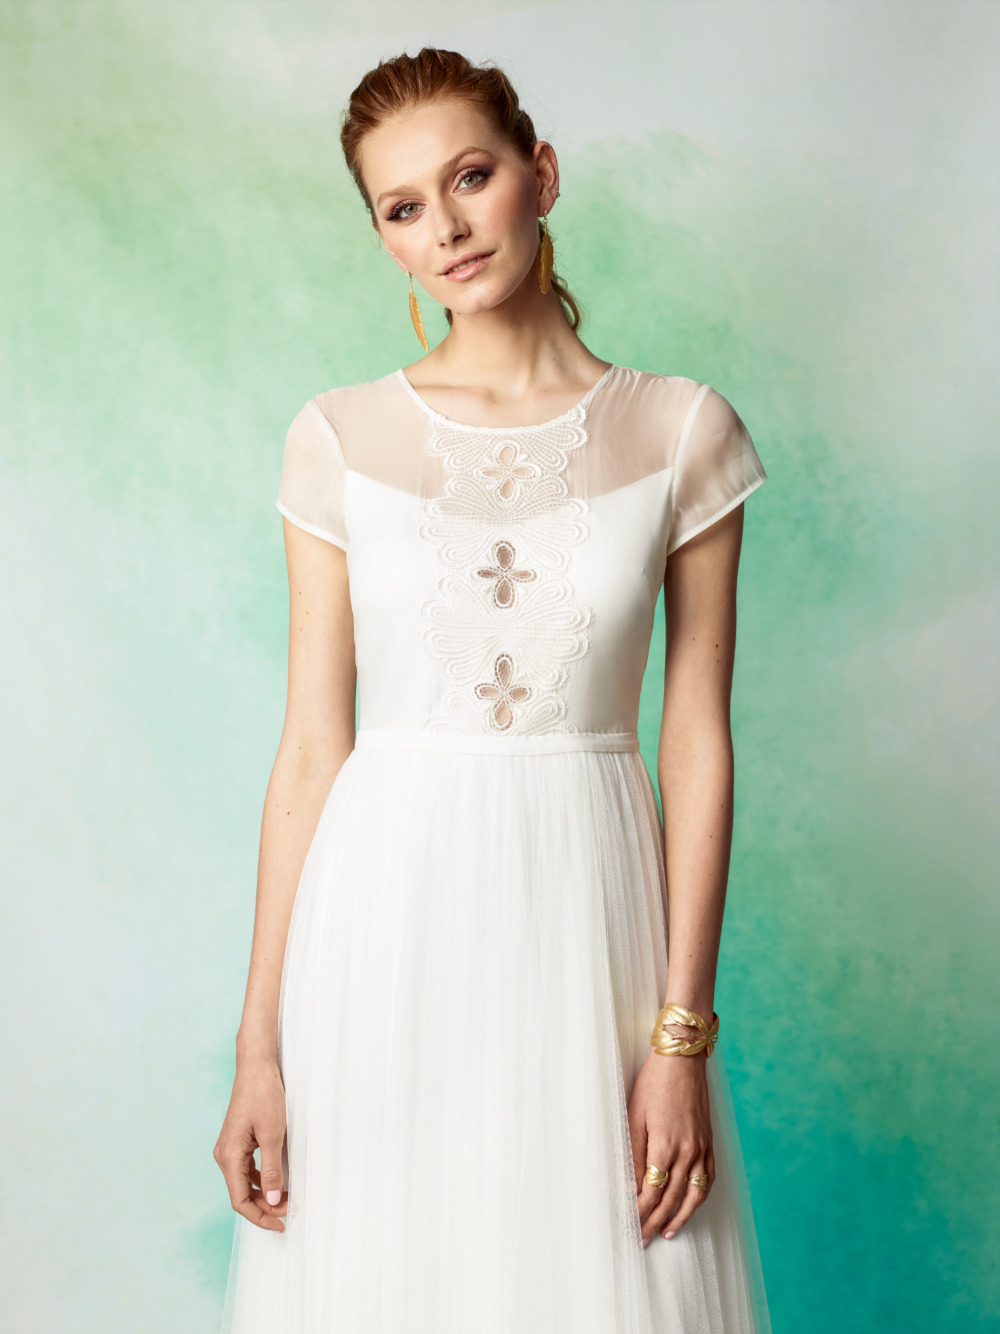 bohemian-chic-styling-wedding-dresses